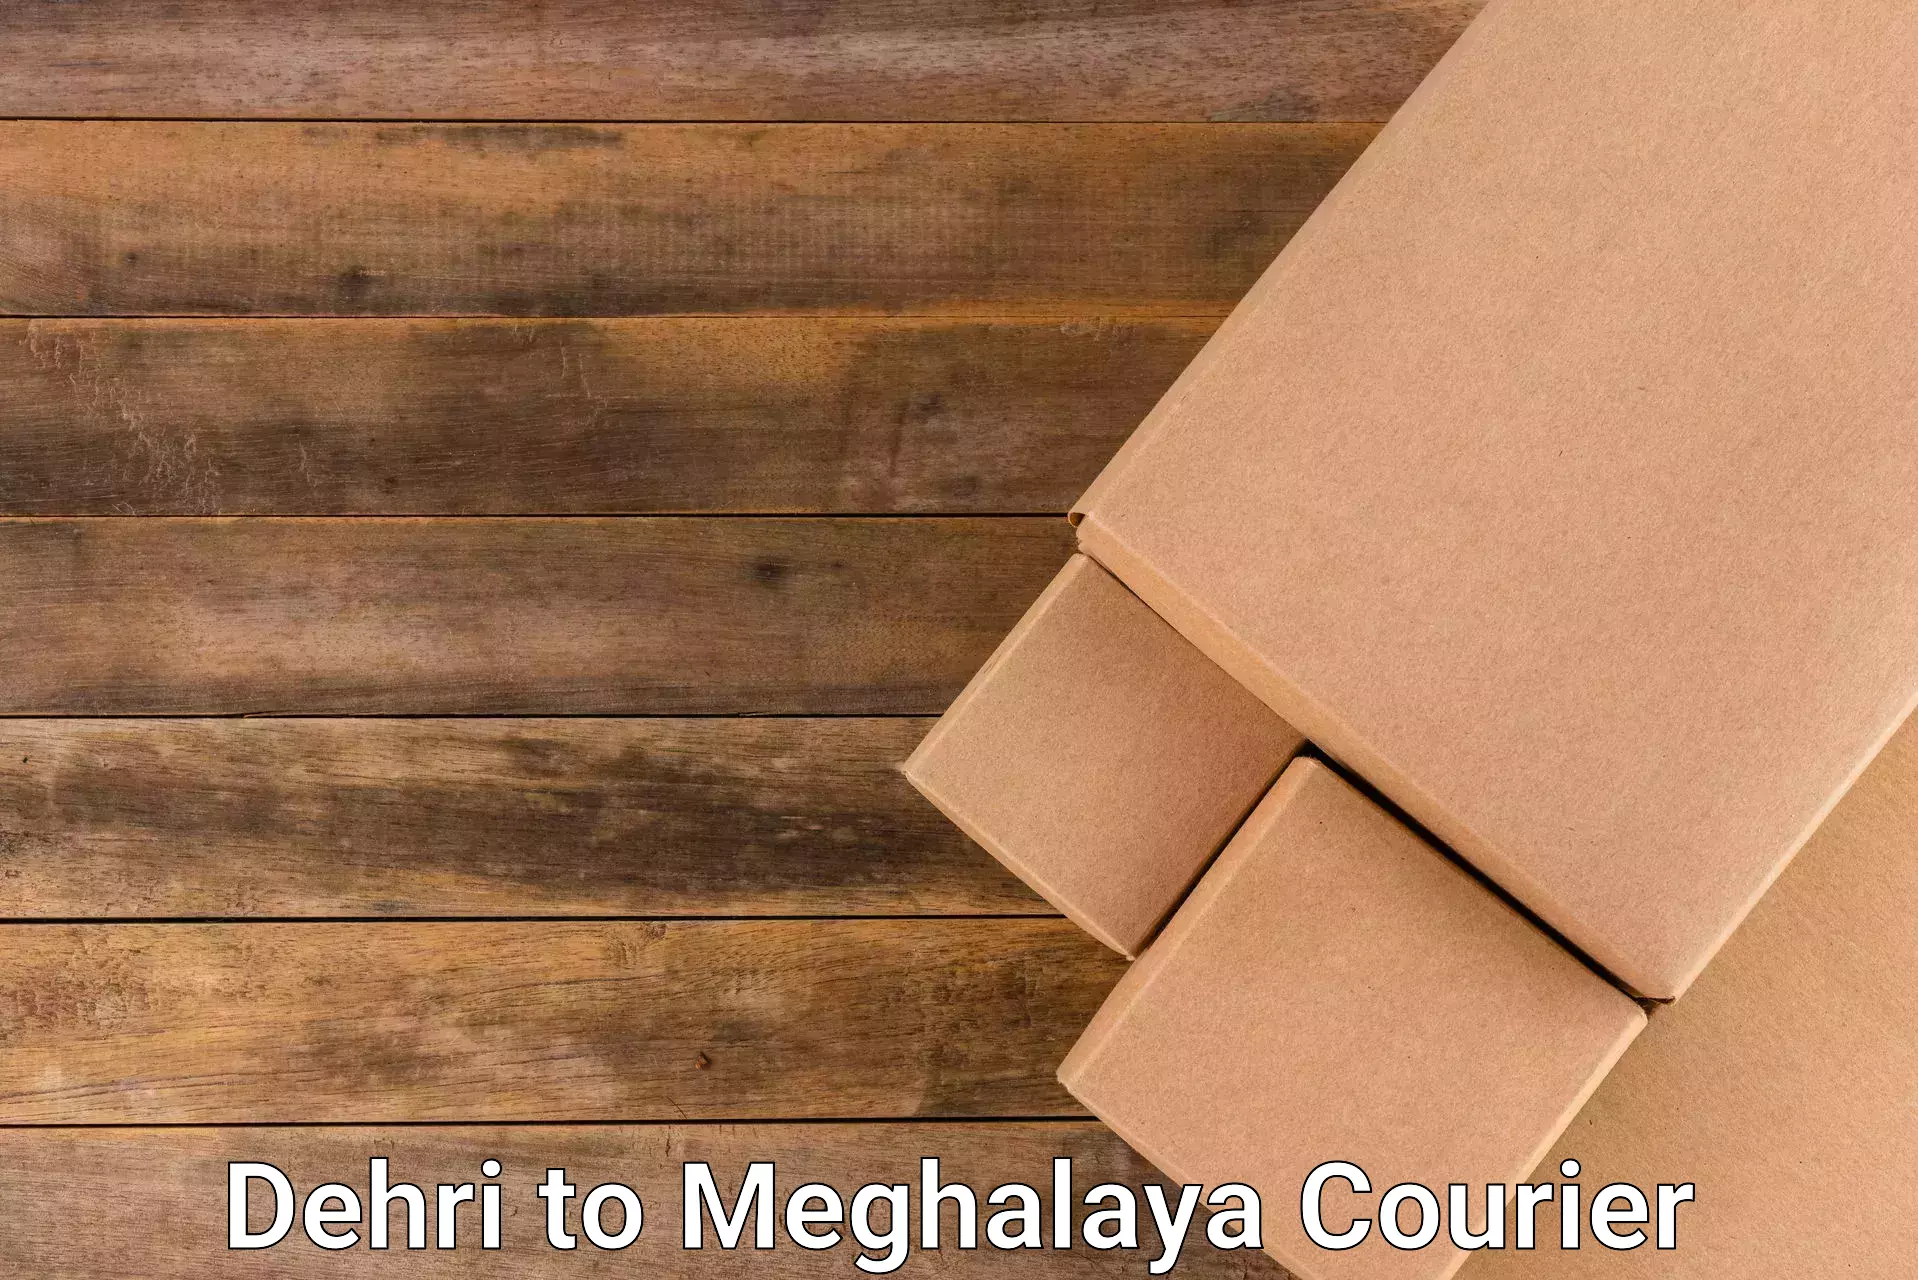 Courier service innovation Dehri to Phulbari